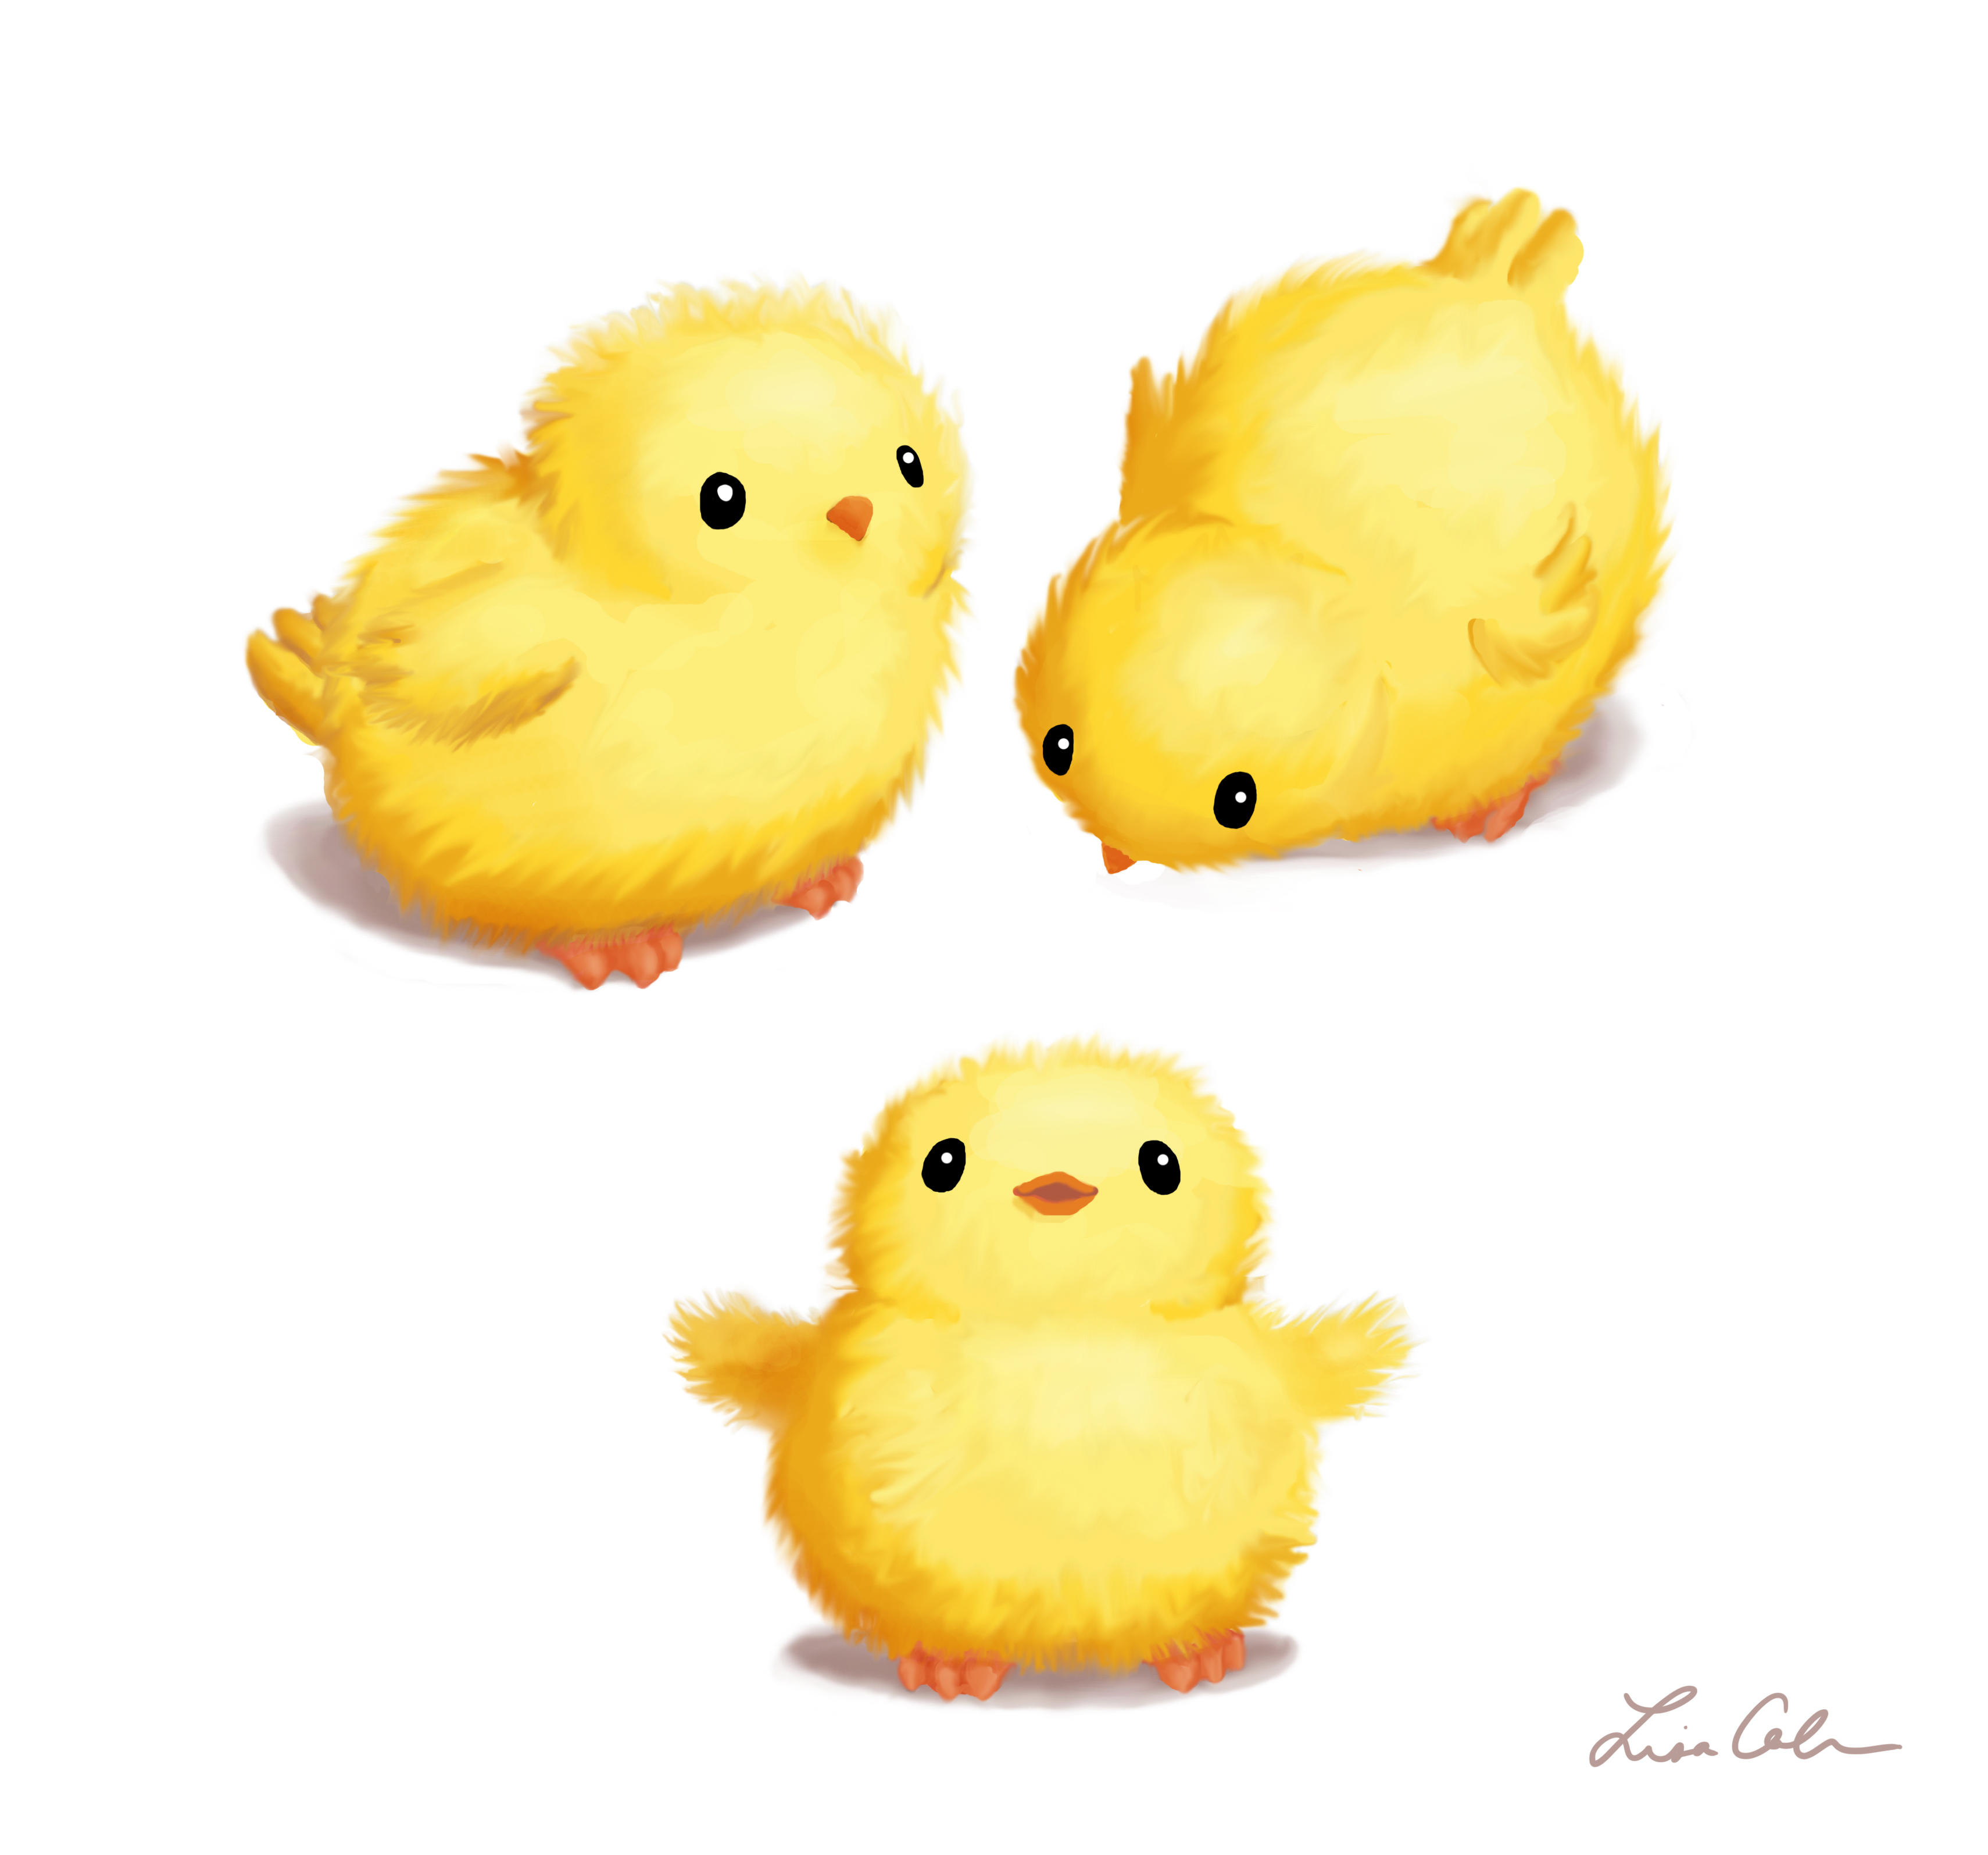 Easter Chicks by LMColver on DeviantArt